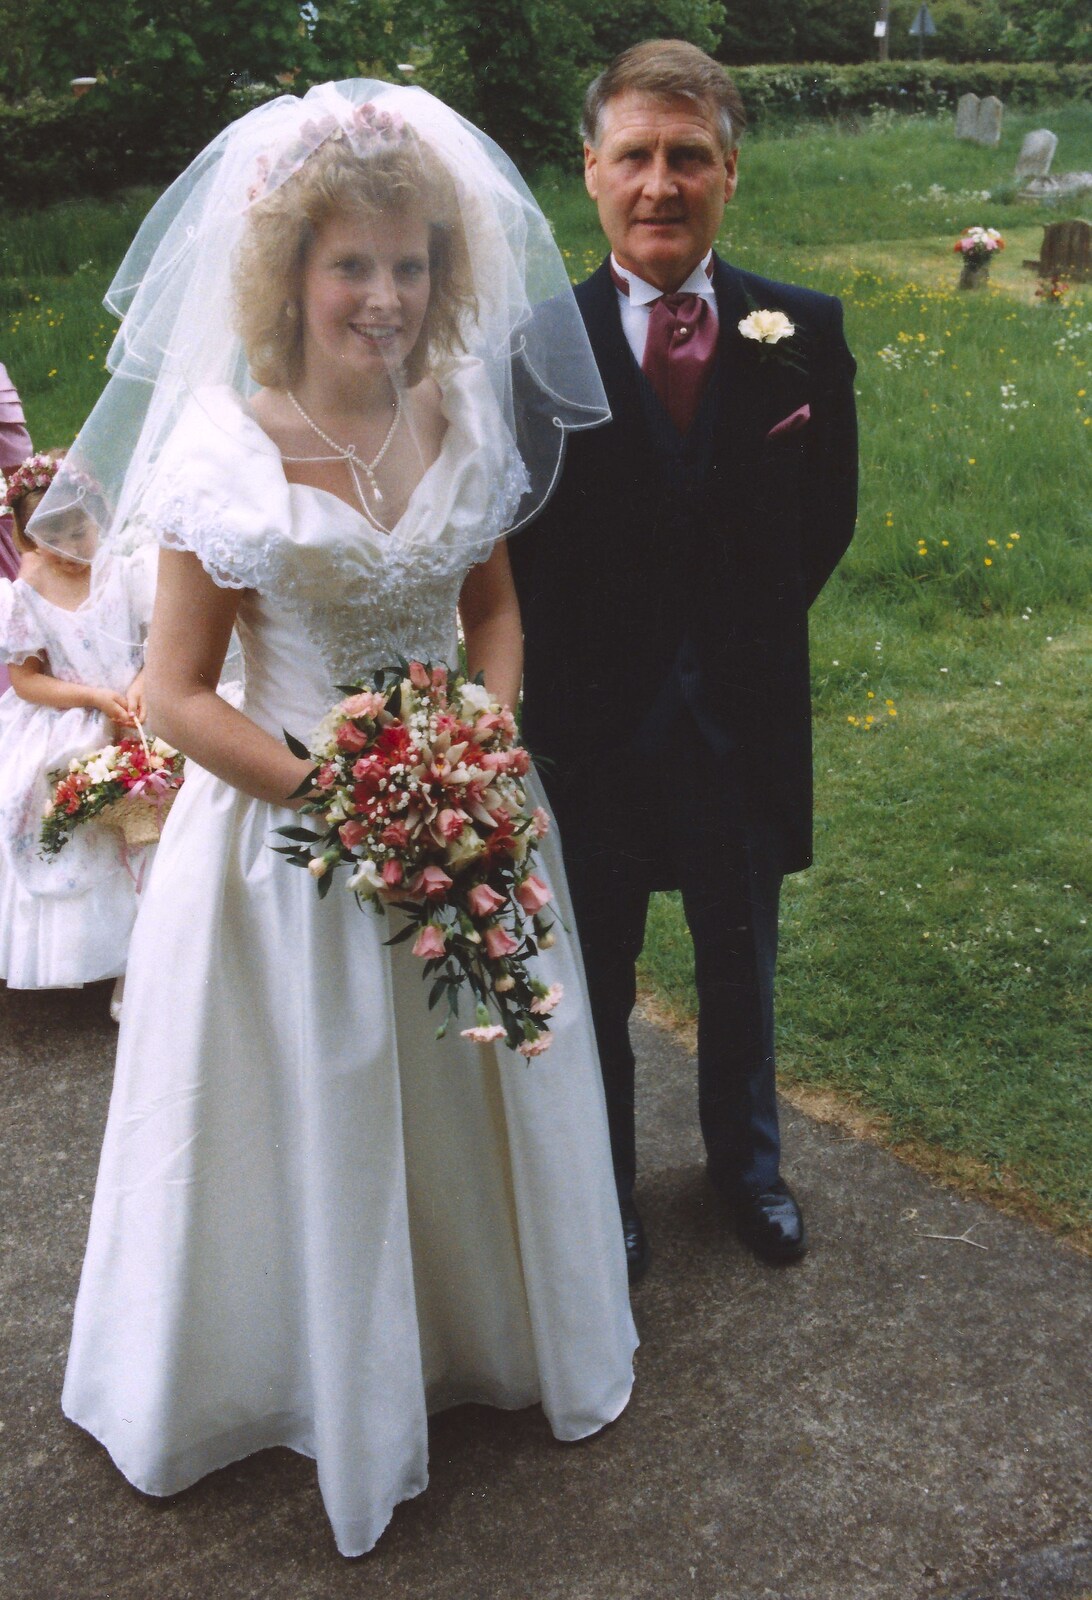 Debbie and Bernie from Debbie's Wedding, Suffolk - 12th June 1999